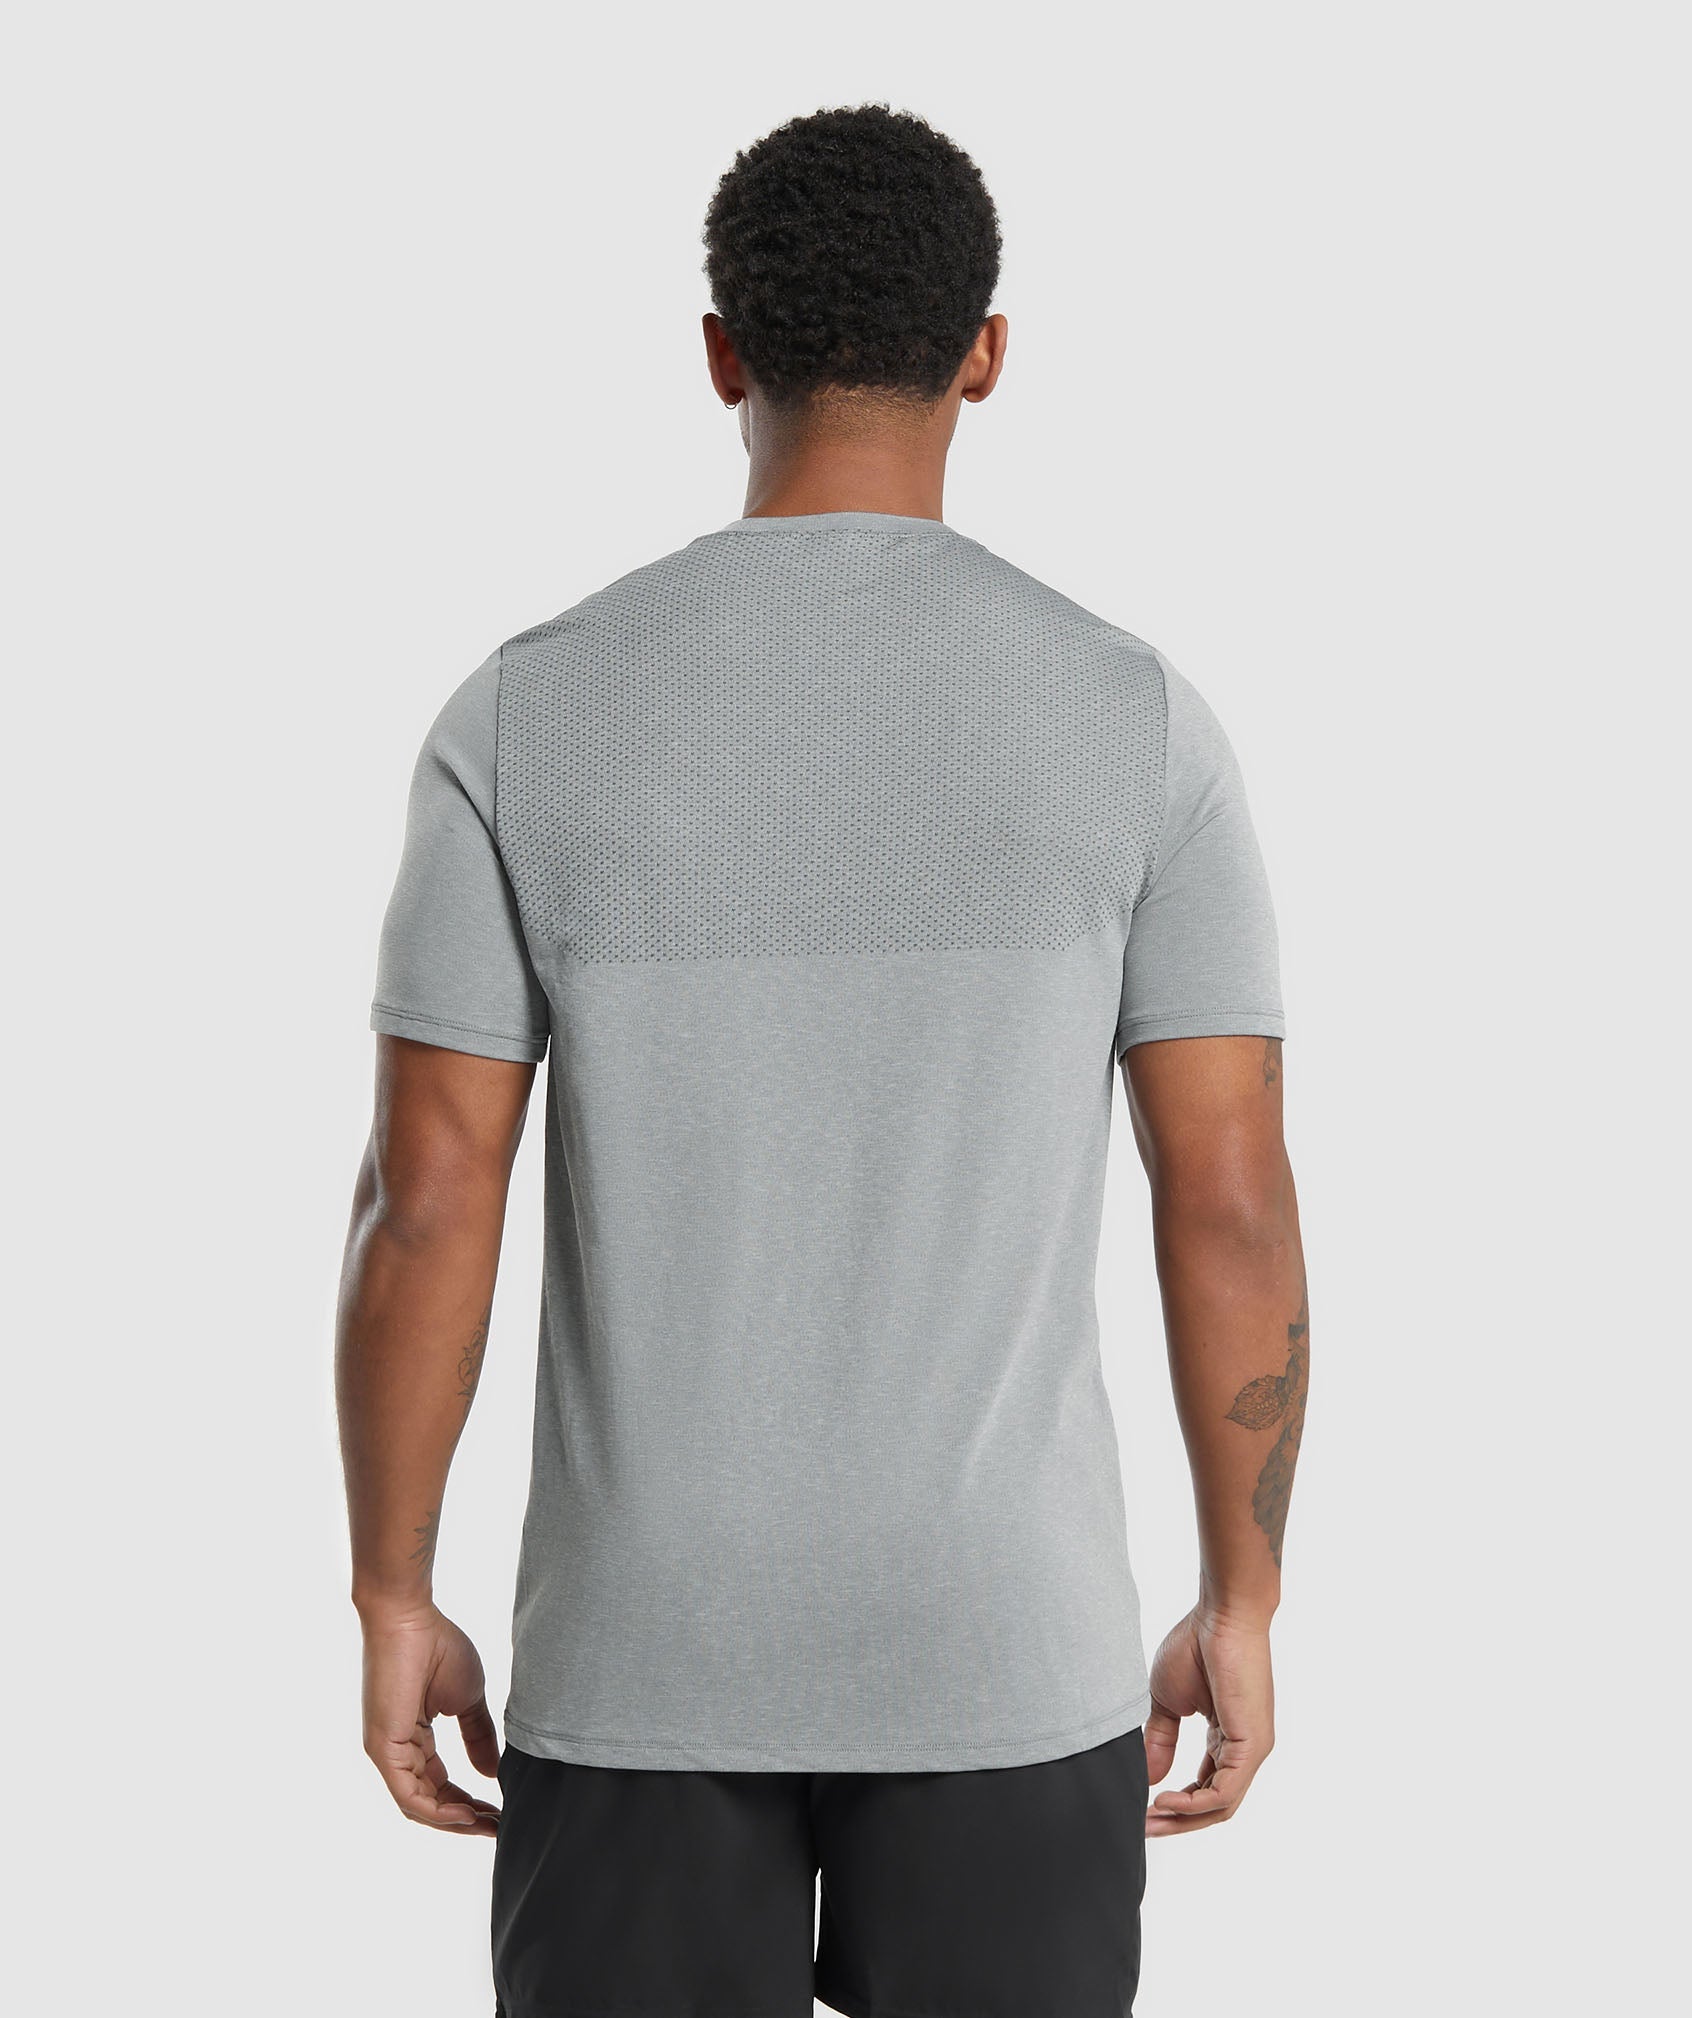 Vital Seamless T-Shirt in Light Grey/Black Marl - view 2